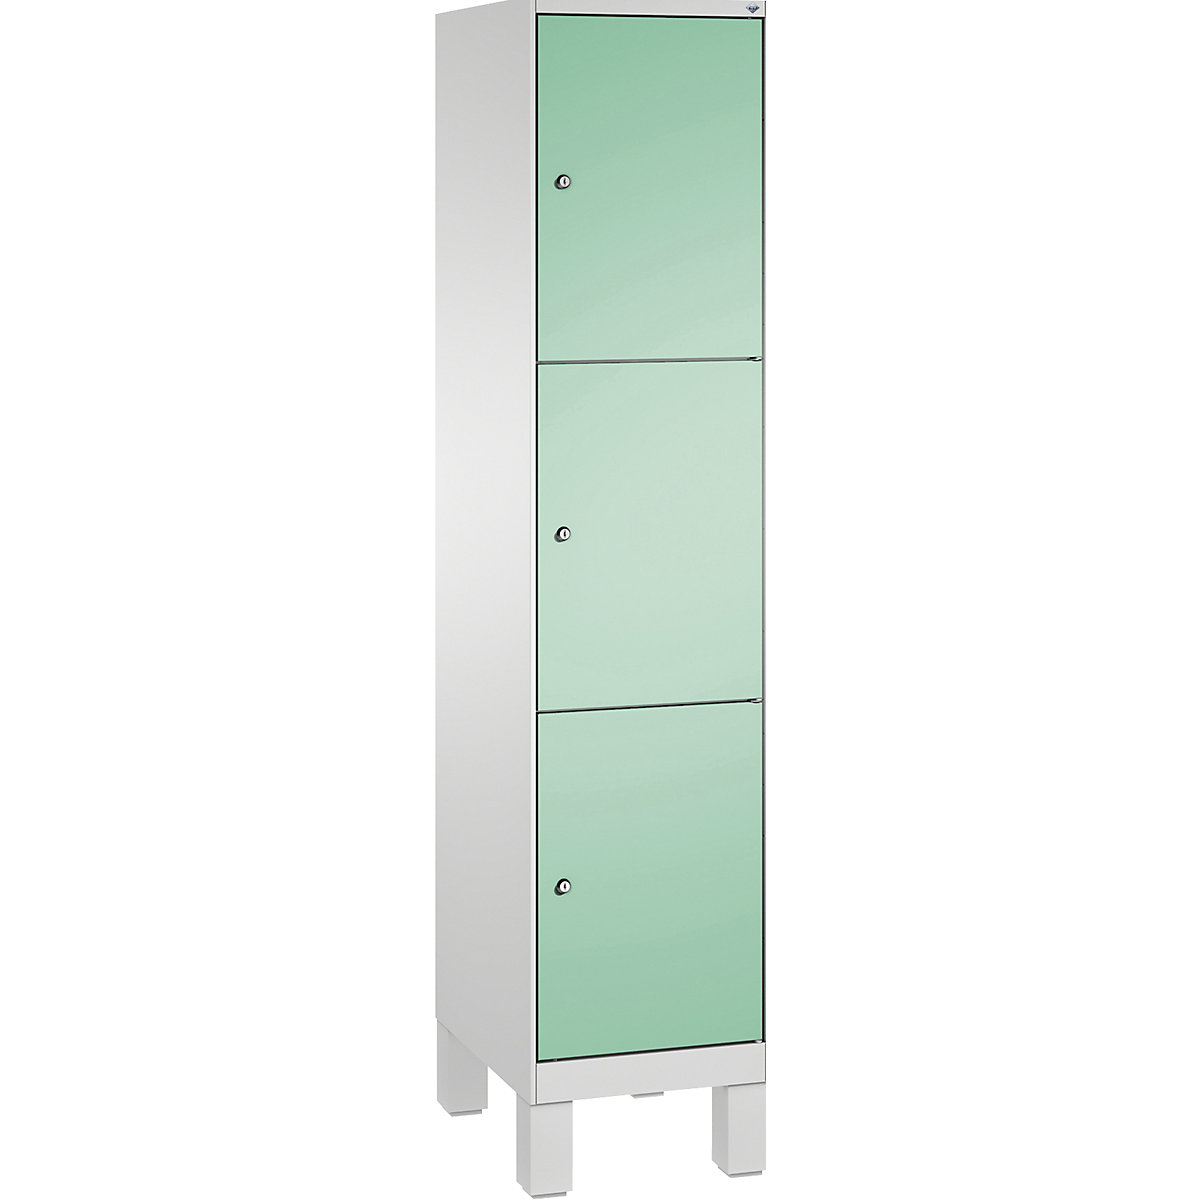 EVOLO locker unit, with feet – C+P, 1 compartment, 3 shelf compartments, compartment width 400 mm, light grey / light green